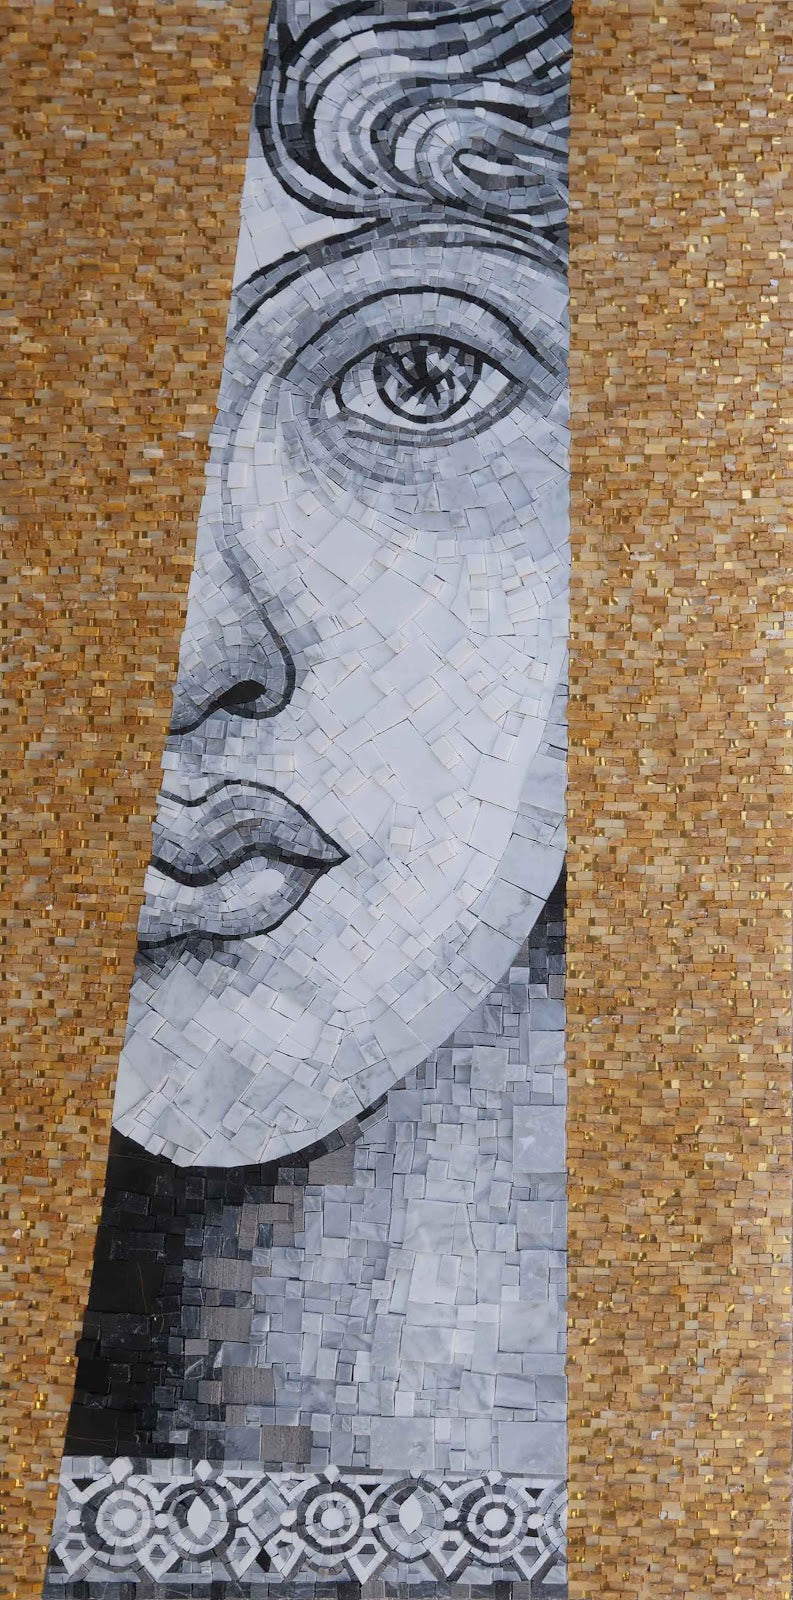 The Roman Lady Mosaic Portrait by Mozaico